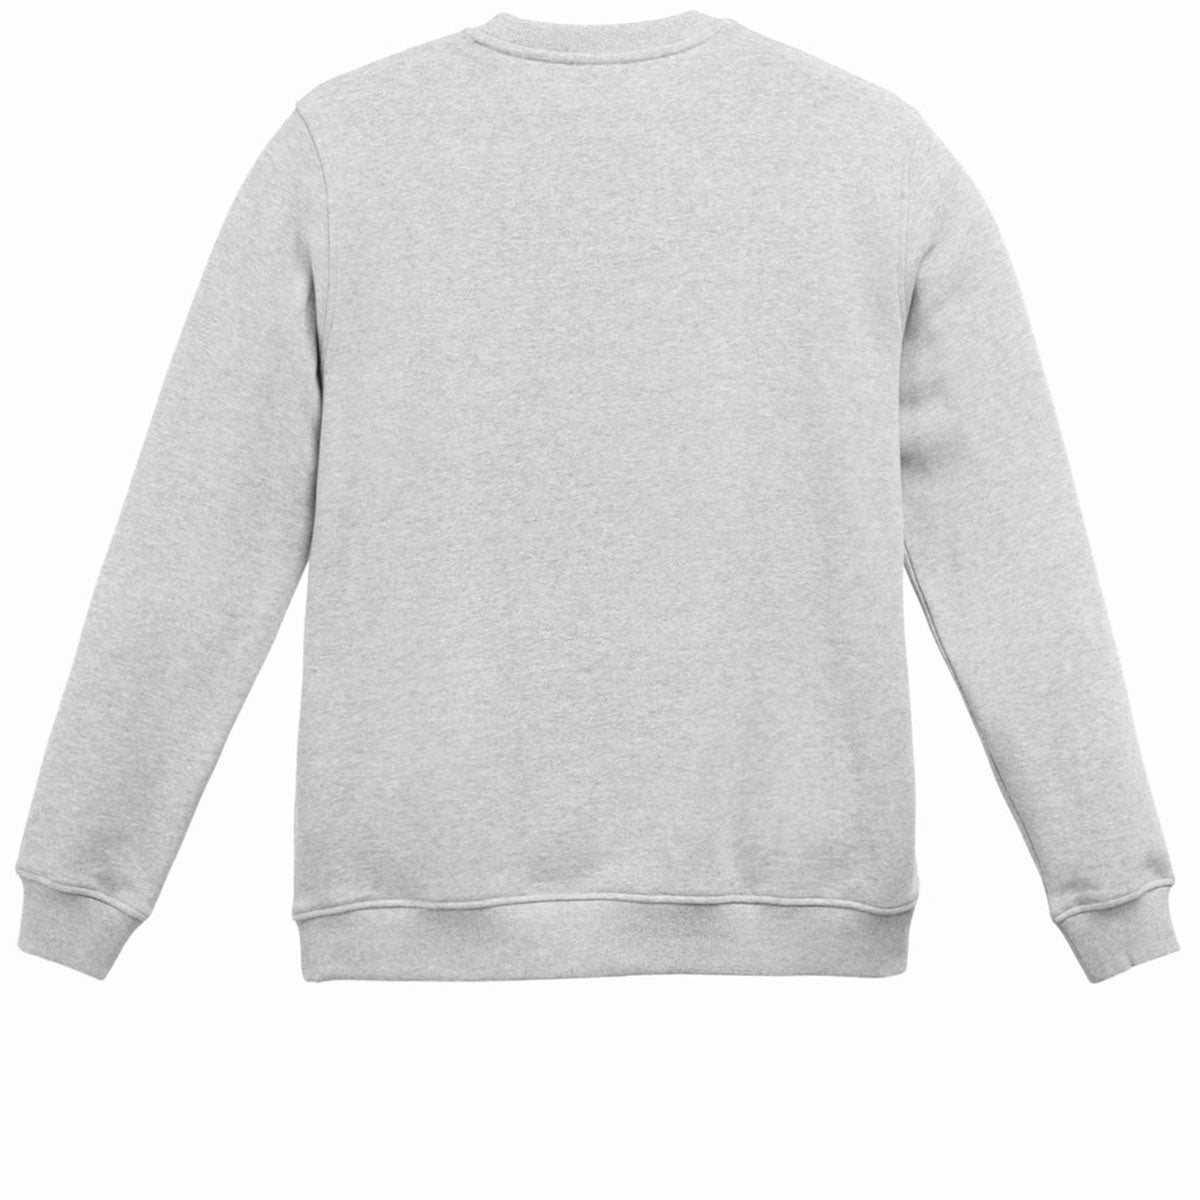 Herschel Supply Basic Crew Sweatshirt - Heather Light Grey/Black image 4